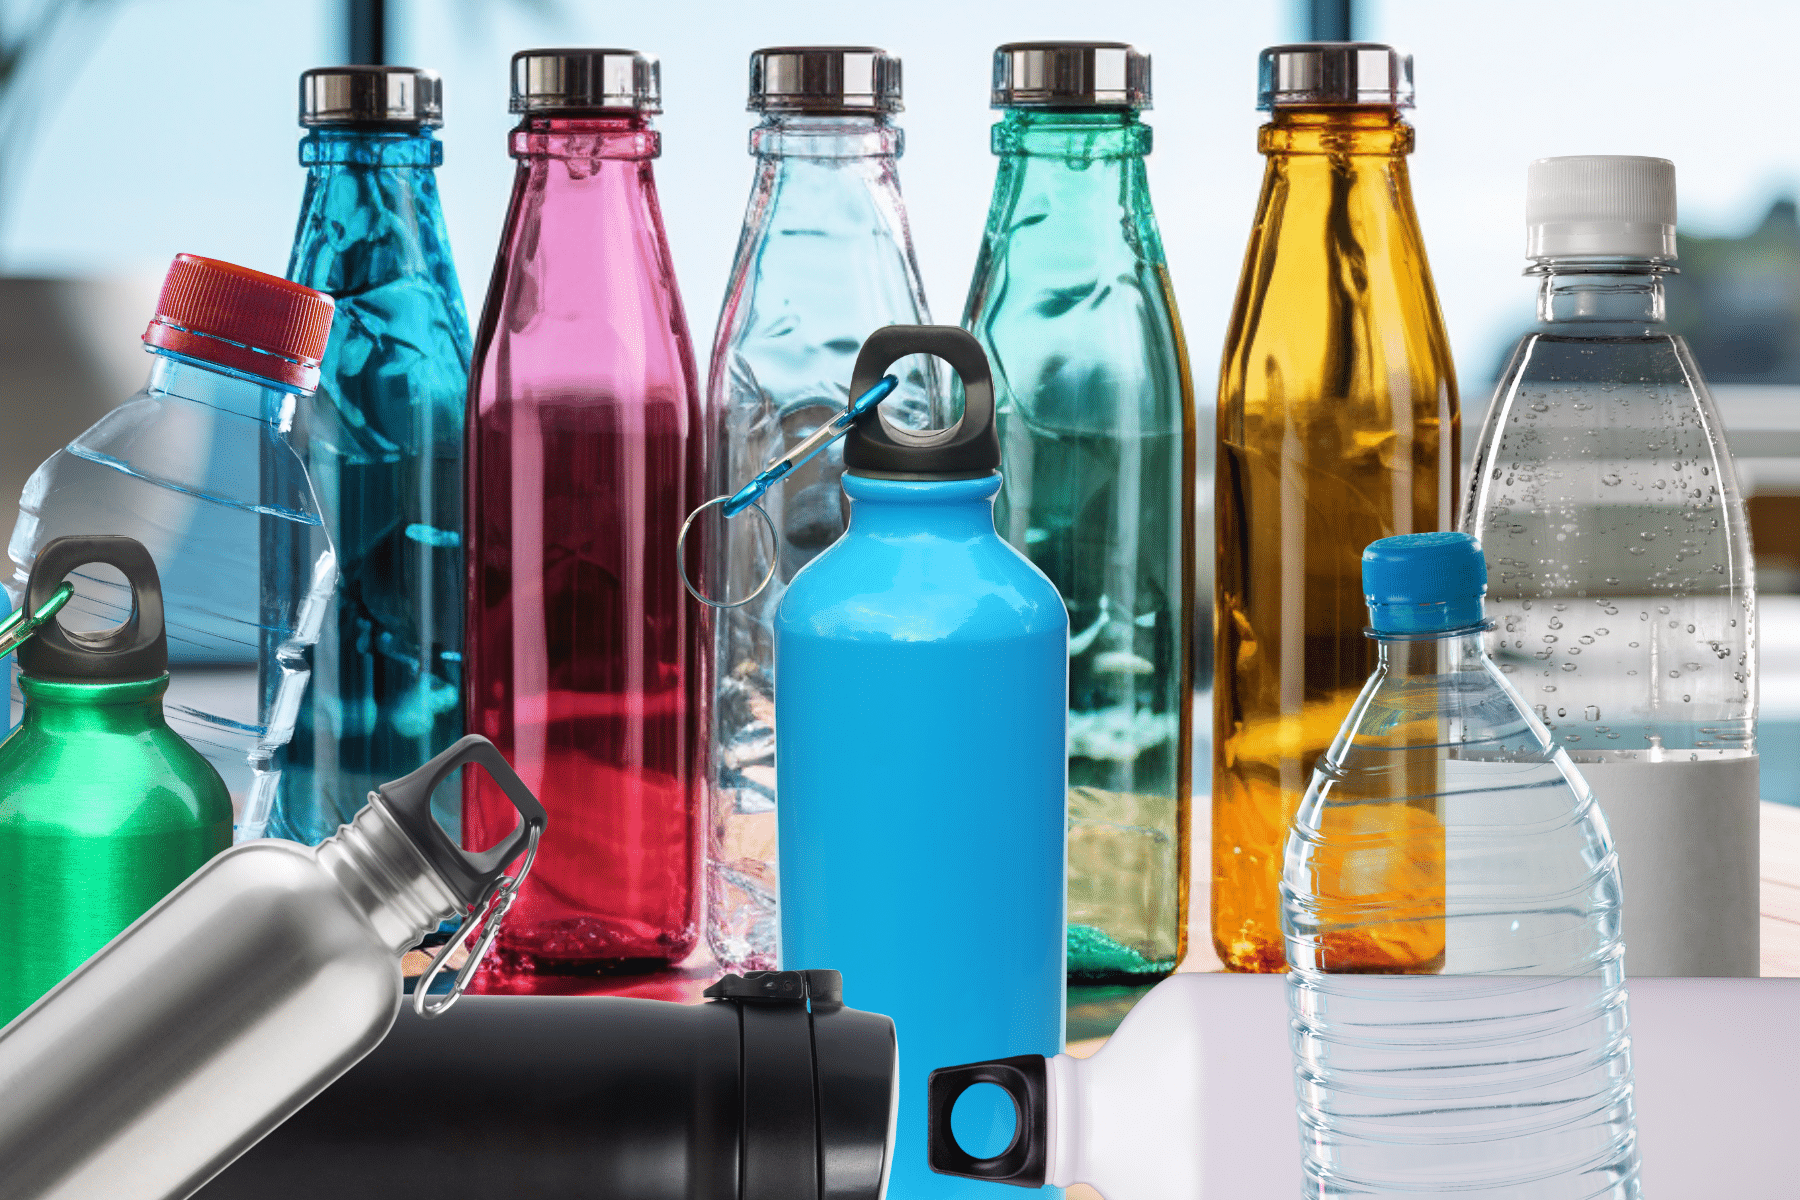 disorganized water bottle storage and organizations